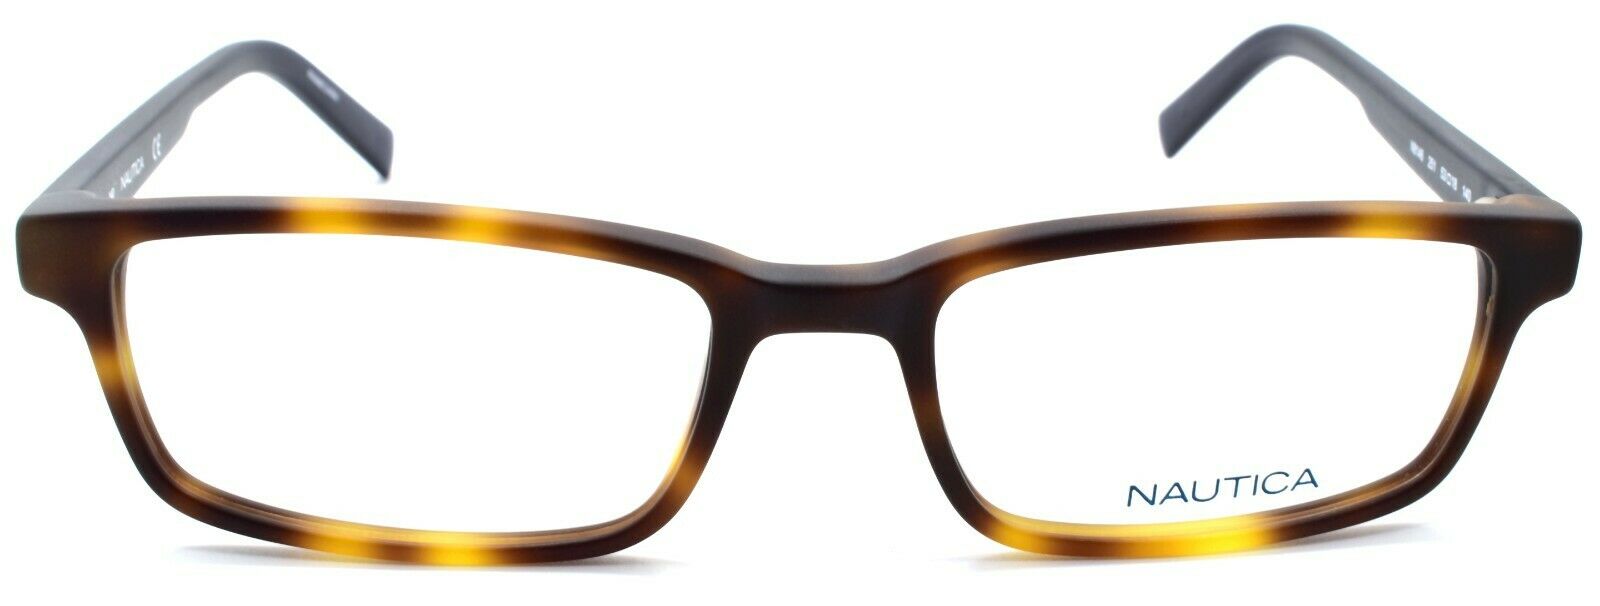 2-Nautica N8146 251 Men's Eyeglasses Frames 53-18-140 Matte Soft Tortoise-688940460506-IKSpecs